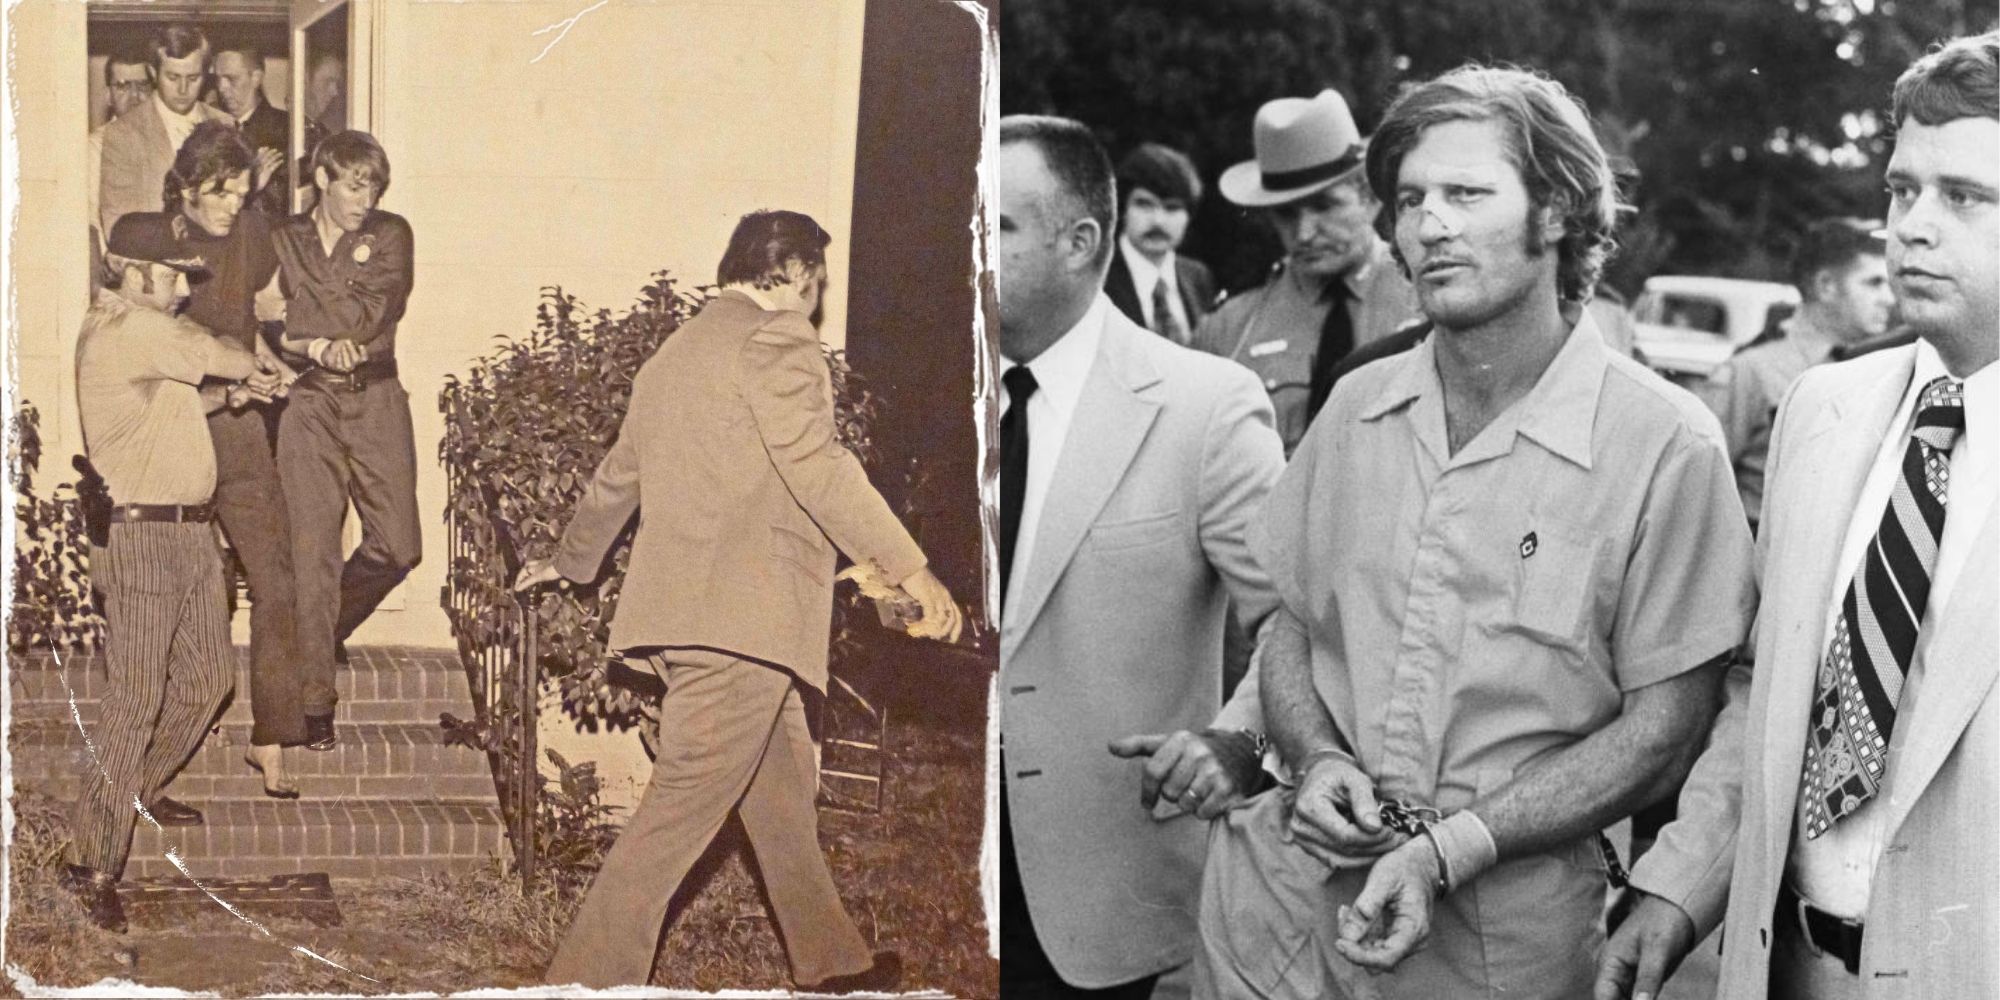 Paul John Knowles the Cassanova serial killer